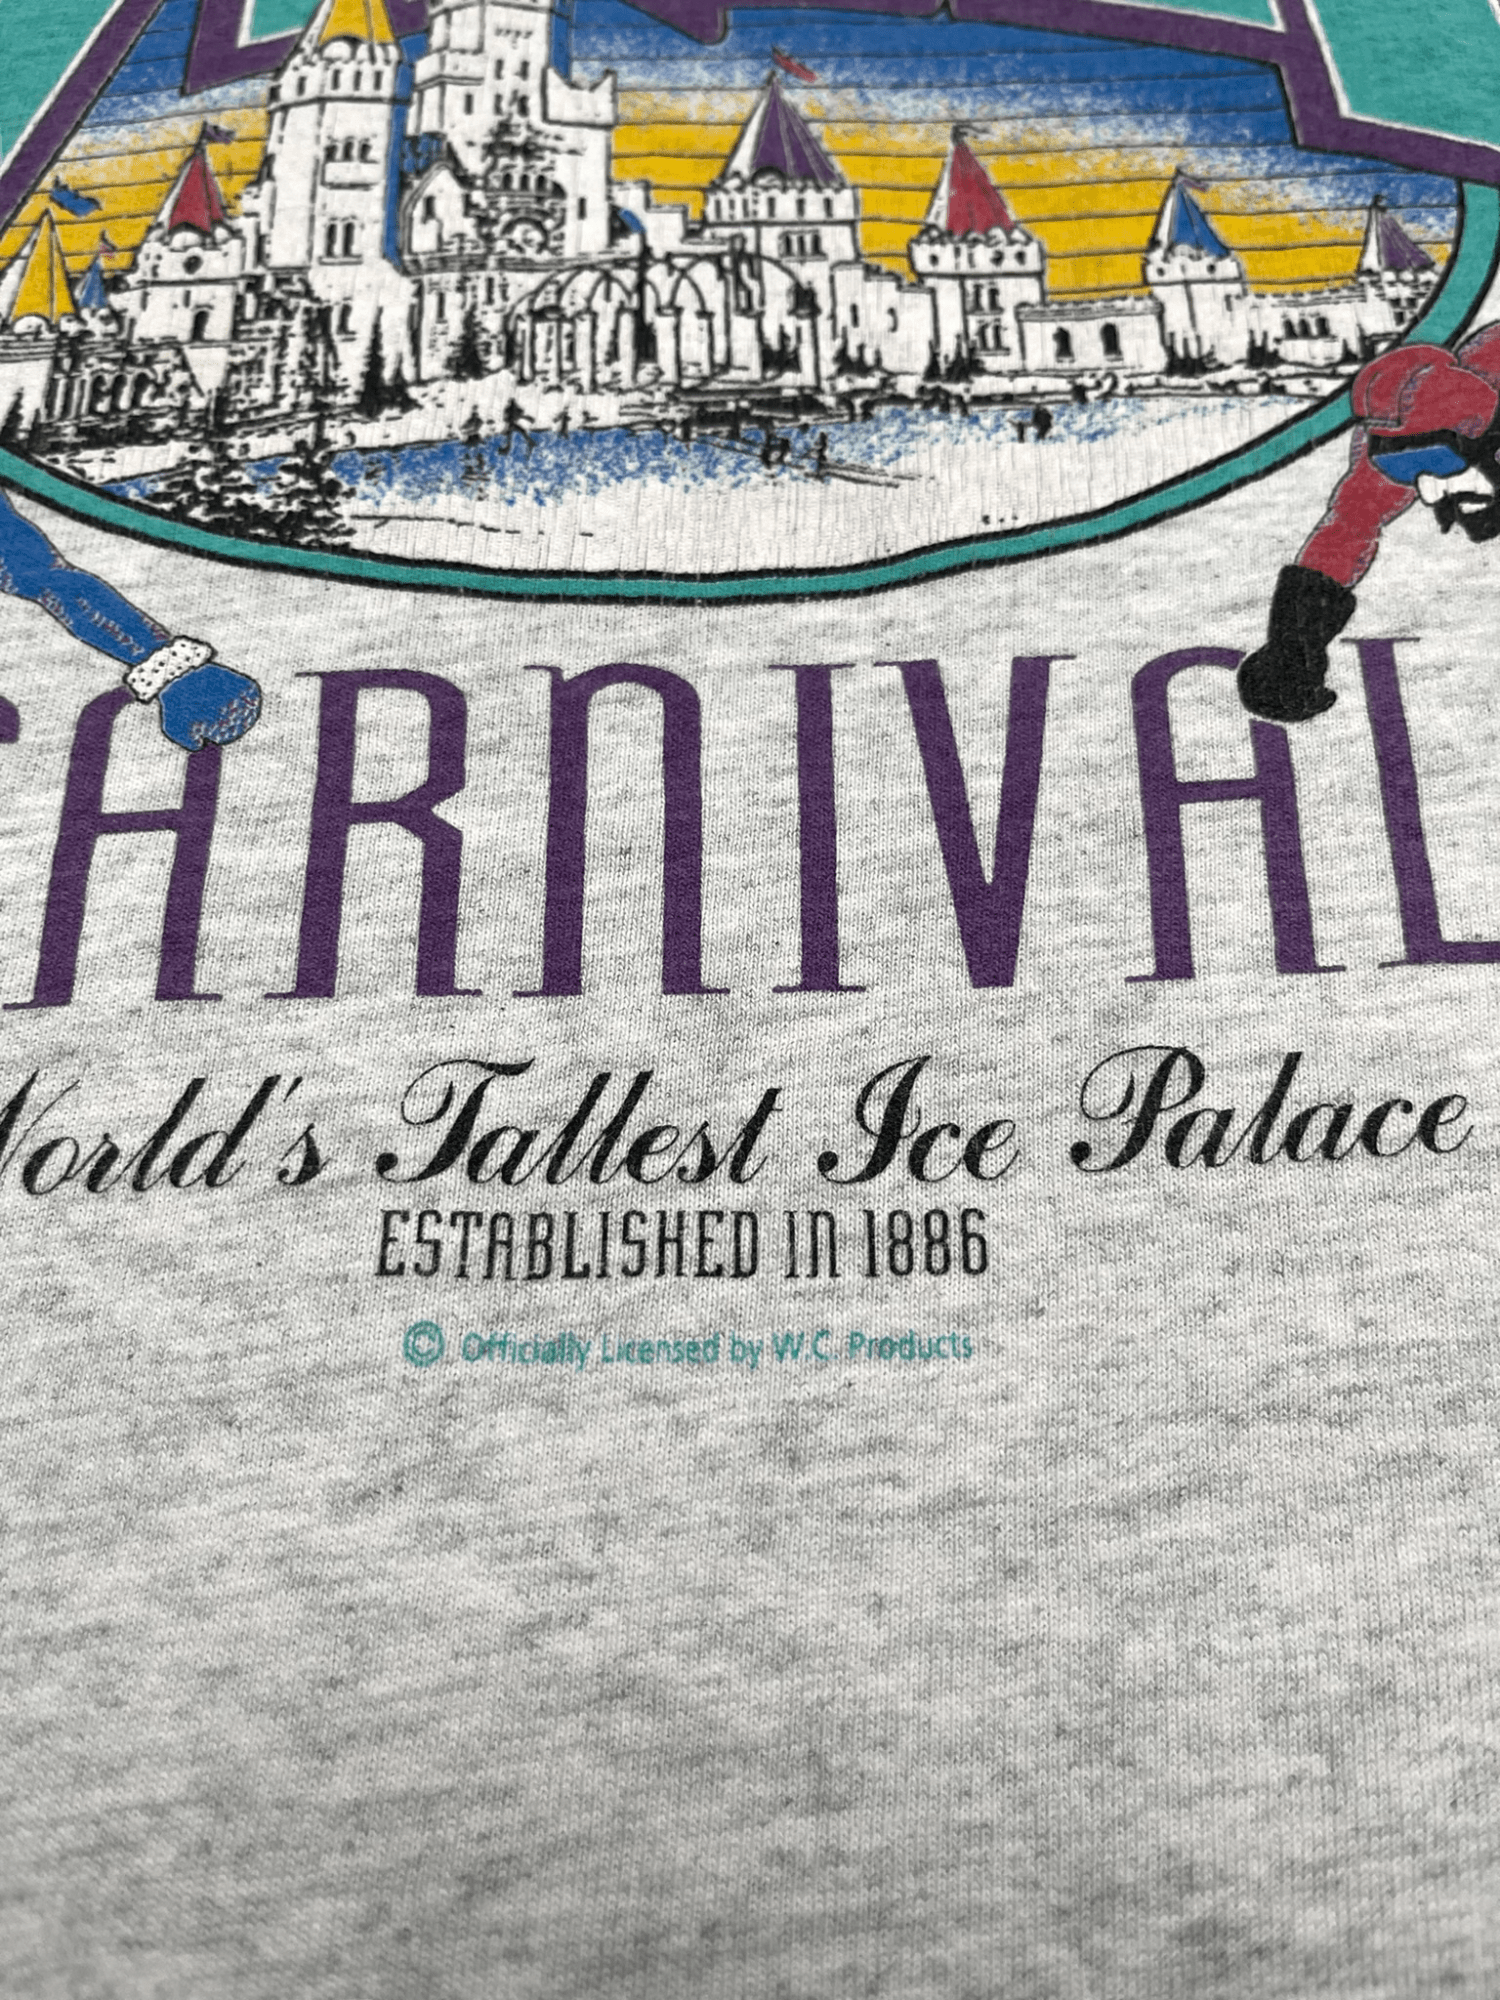 The Vintage Racks T-Shirt Saint Paul Winter Carnaval - L